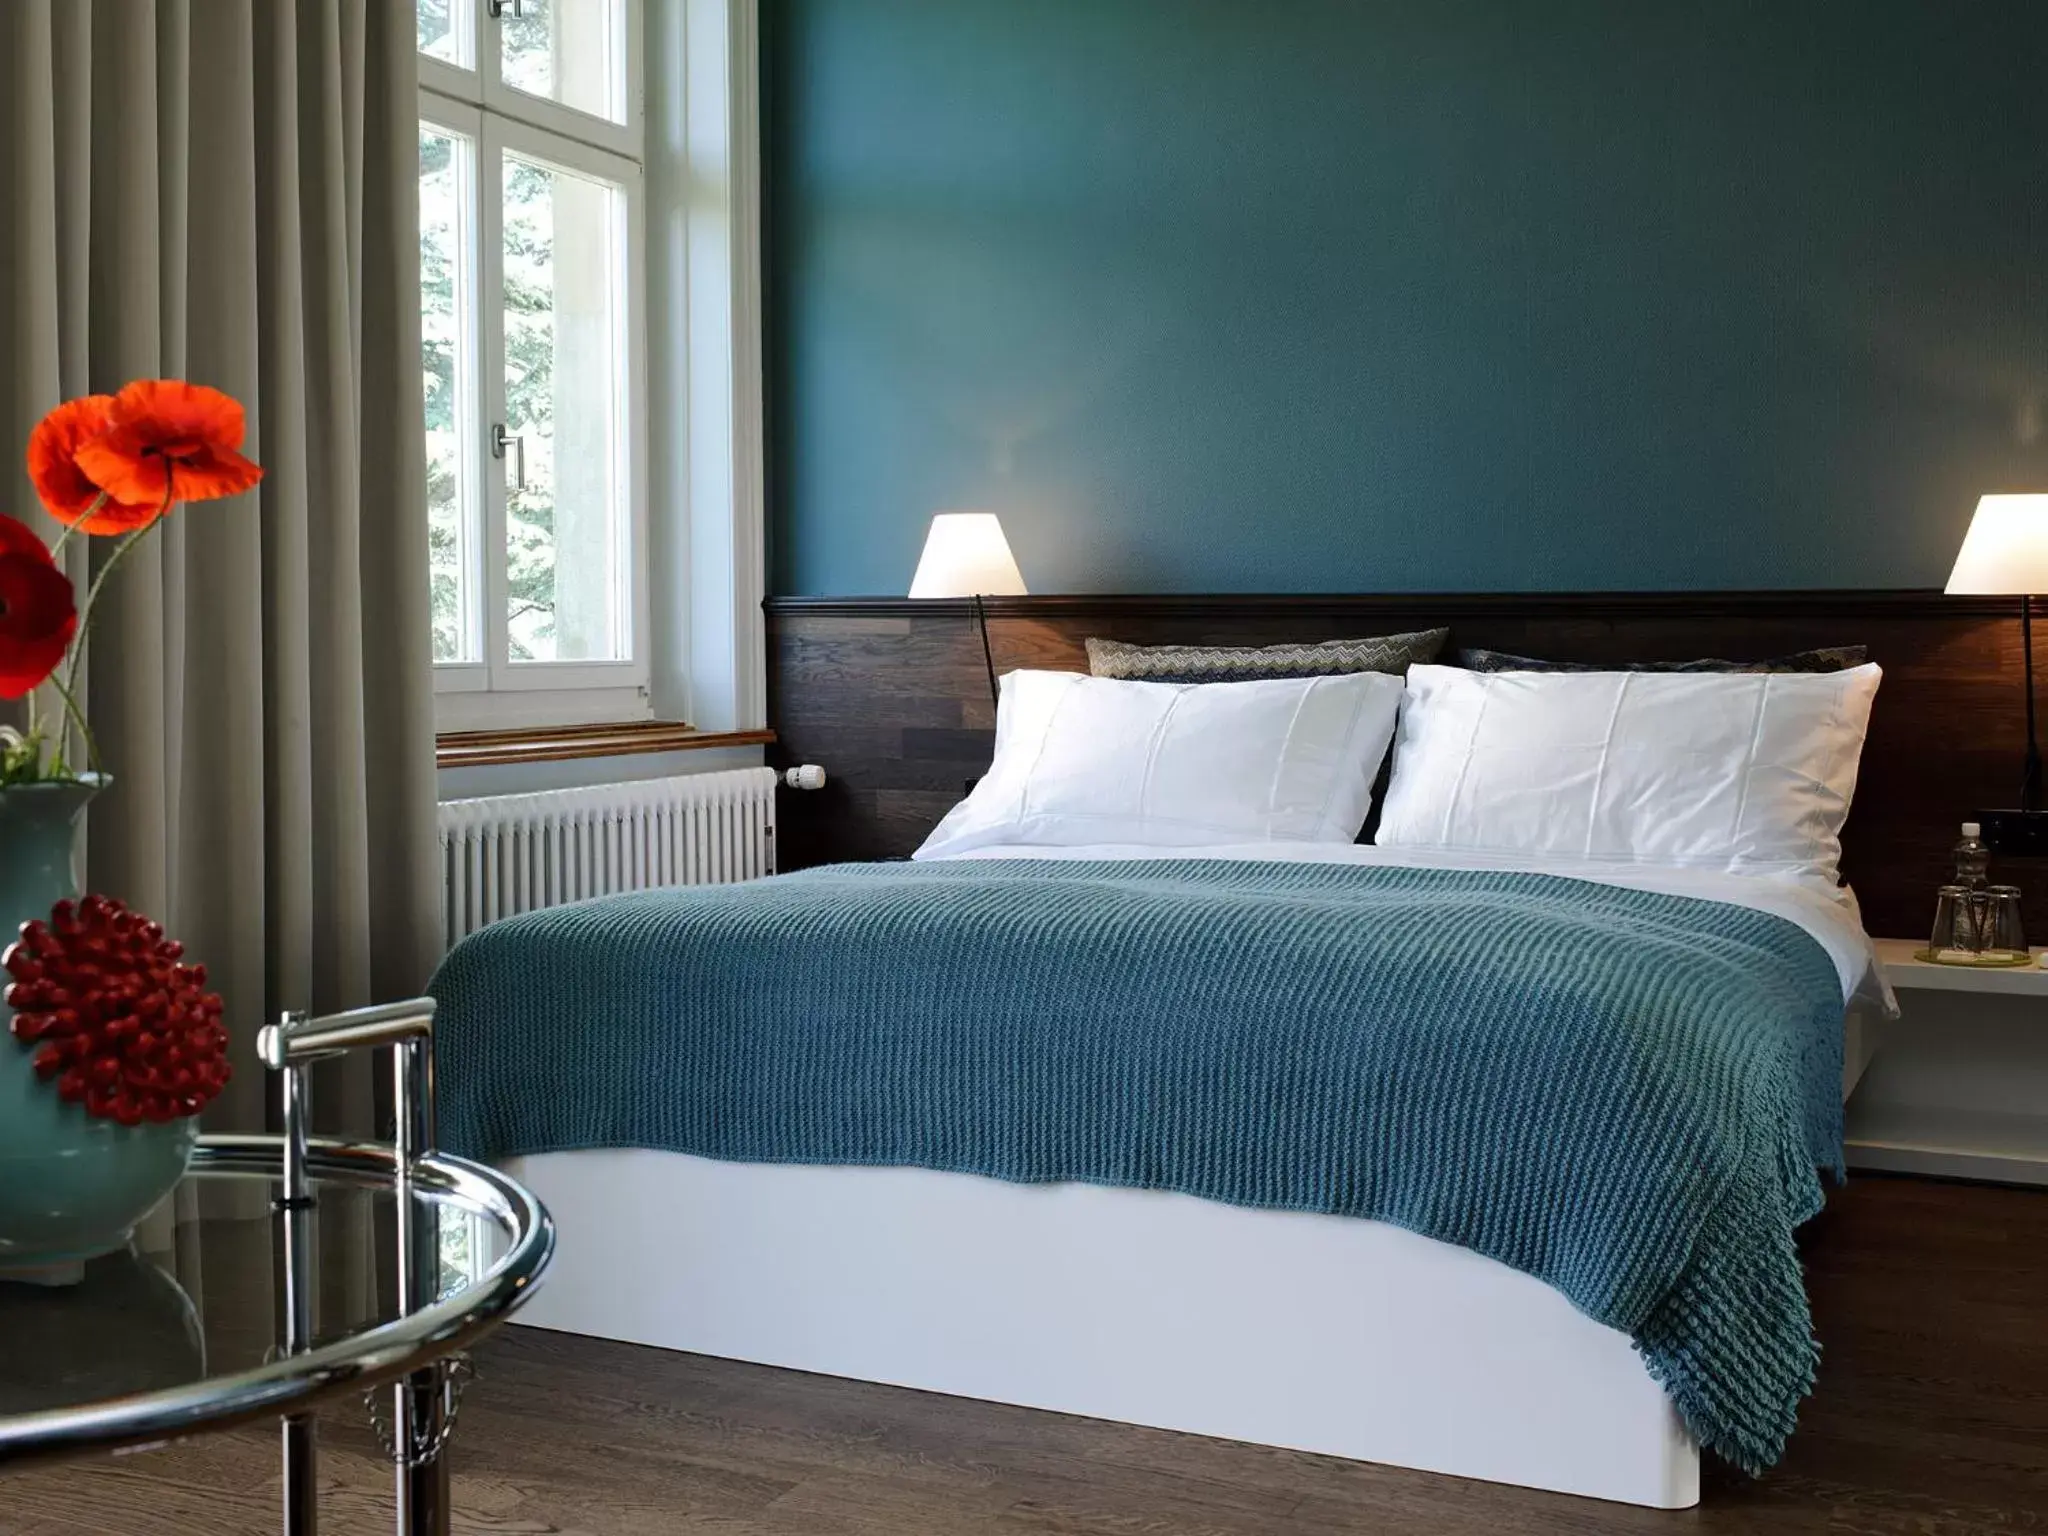 Bed, Room Photo in Design Hotel Plattenhof